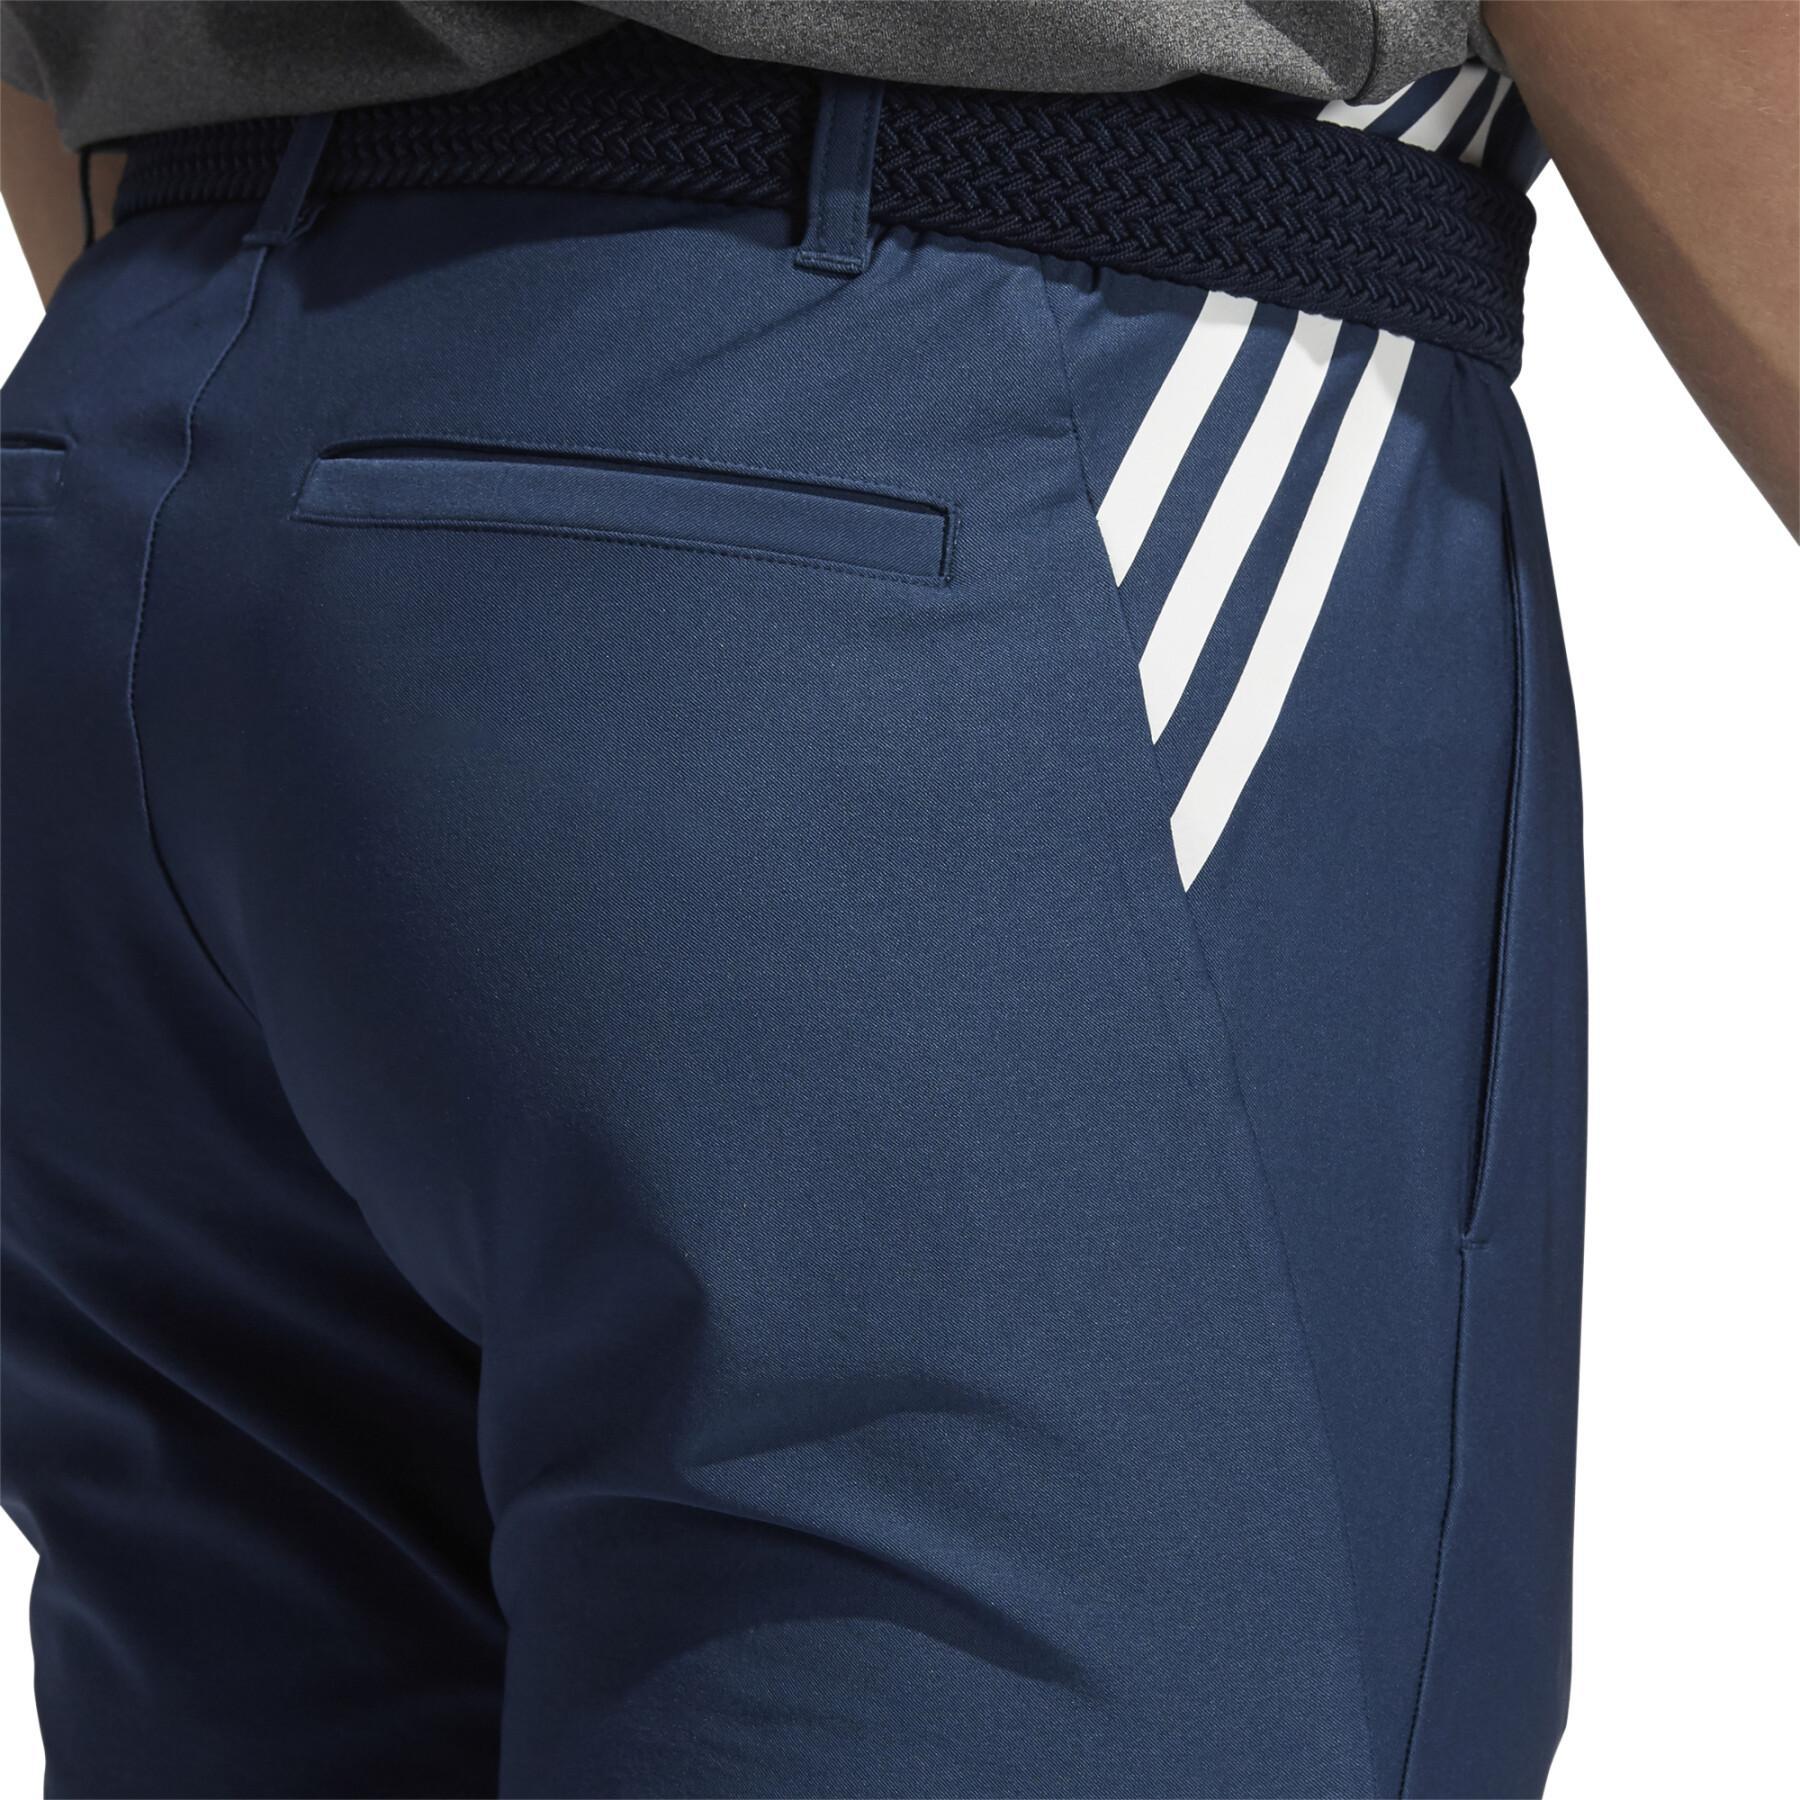 Pantalon adidas Ultimate365 3-Stripes